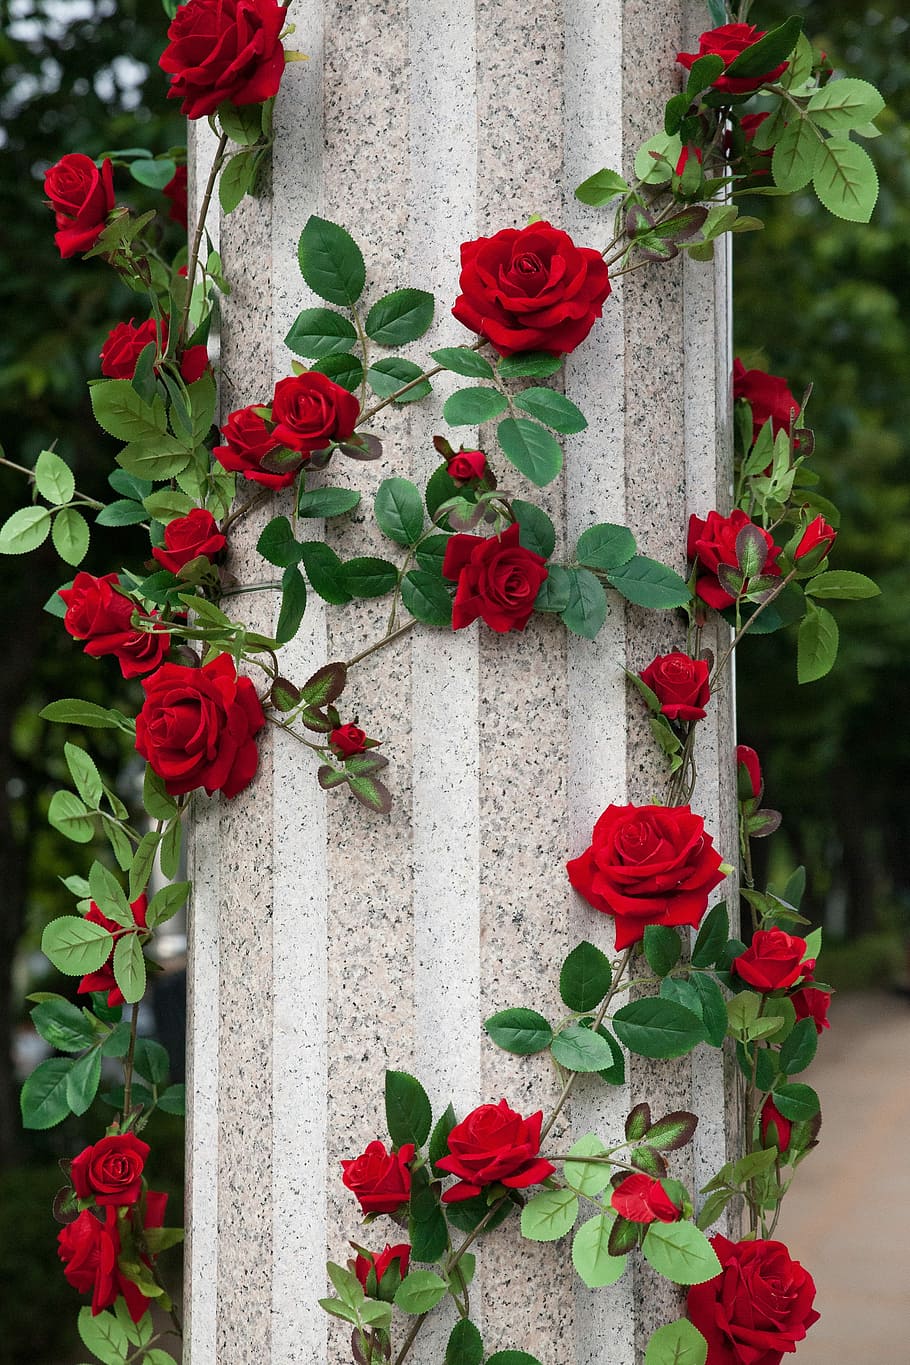 HD wallpaper: red roses around white concrete pillar, flowers ...